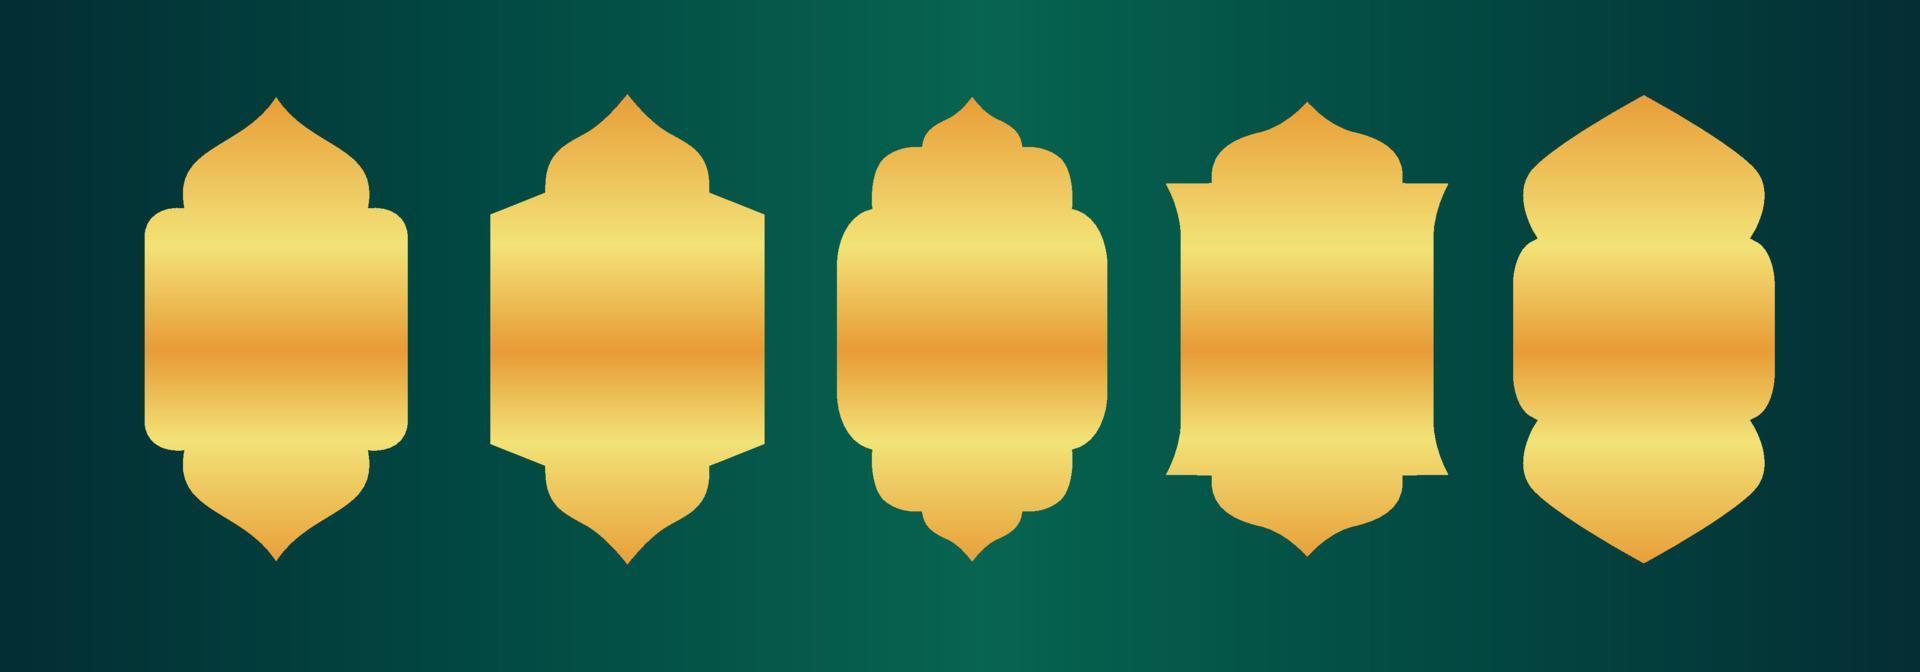 Gold DesigSet of Arab windows for Ramadan Kareem Template vector